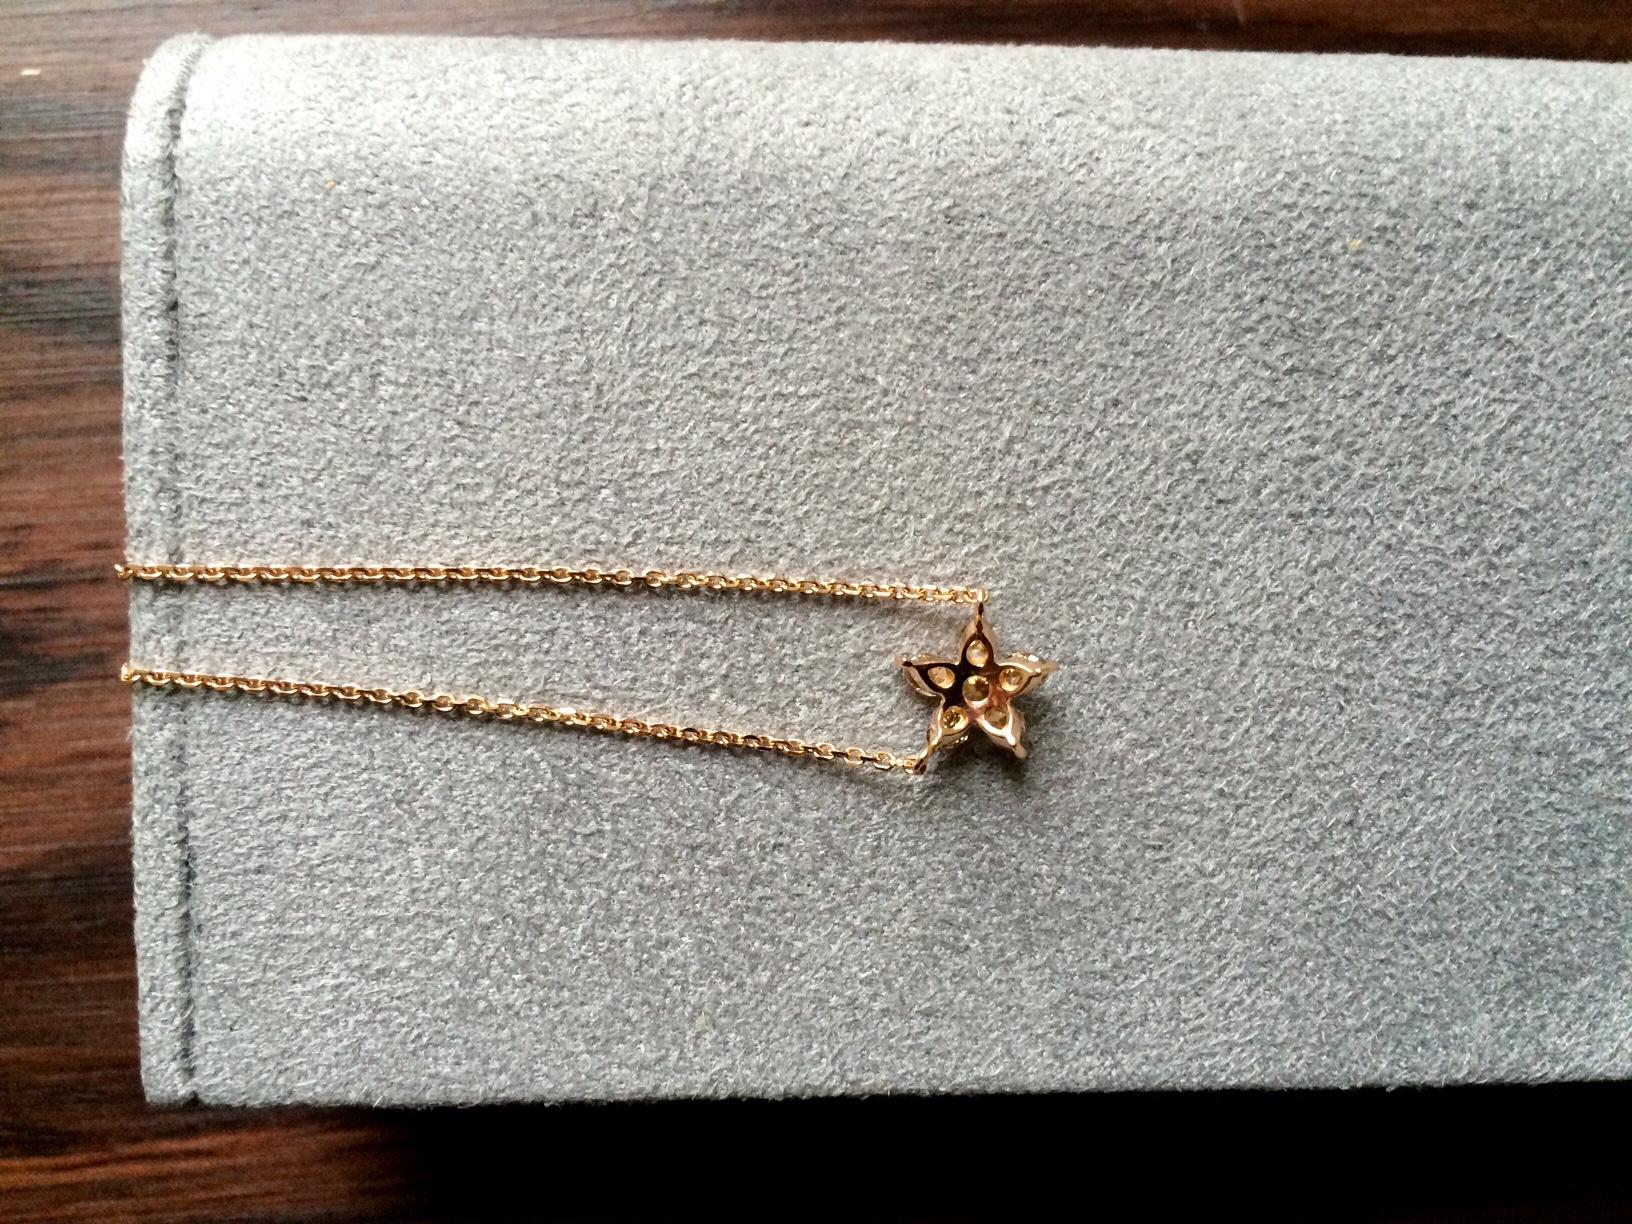 Ana de Costa 18ct Rose Gold Cognac Diamond Flower Pendant And Stud Earrings Set For Sale 7